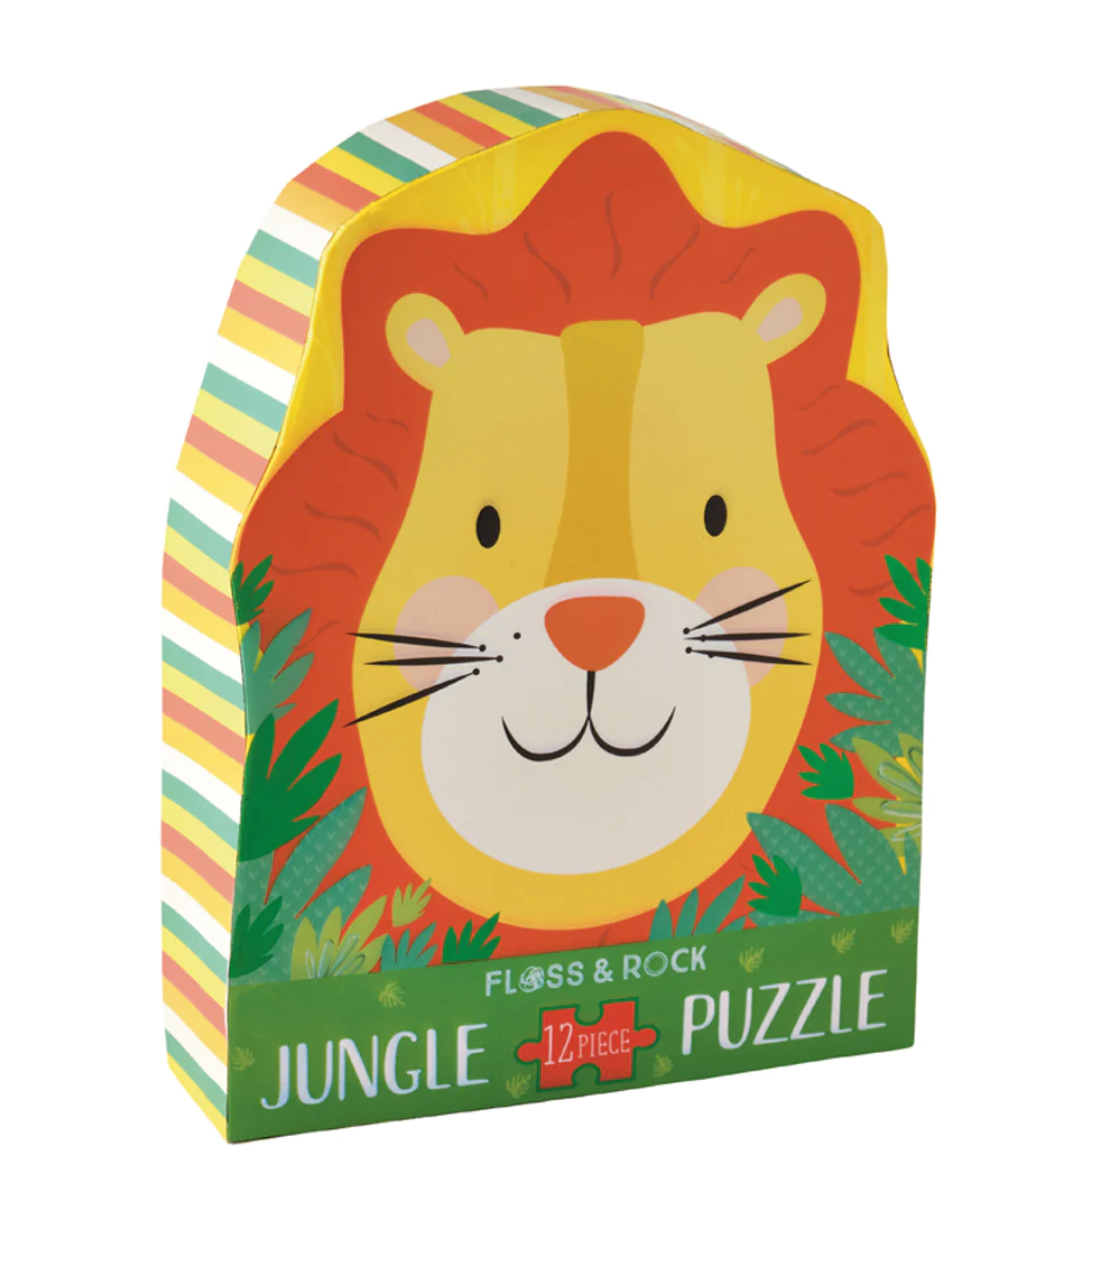 Jungle Jigsaw Puzzle: 12 Piece